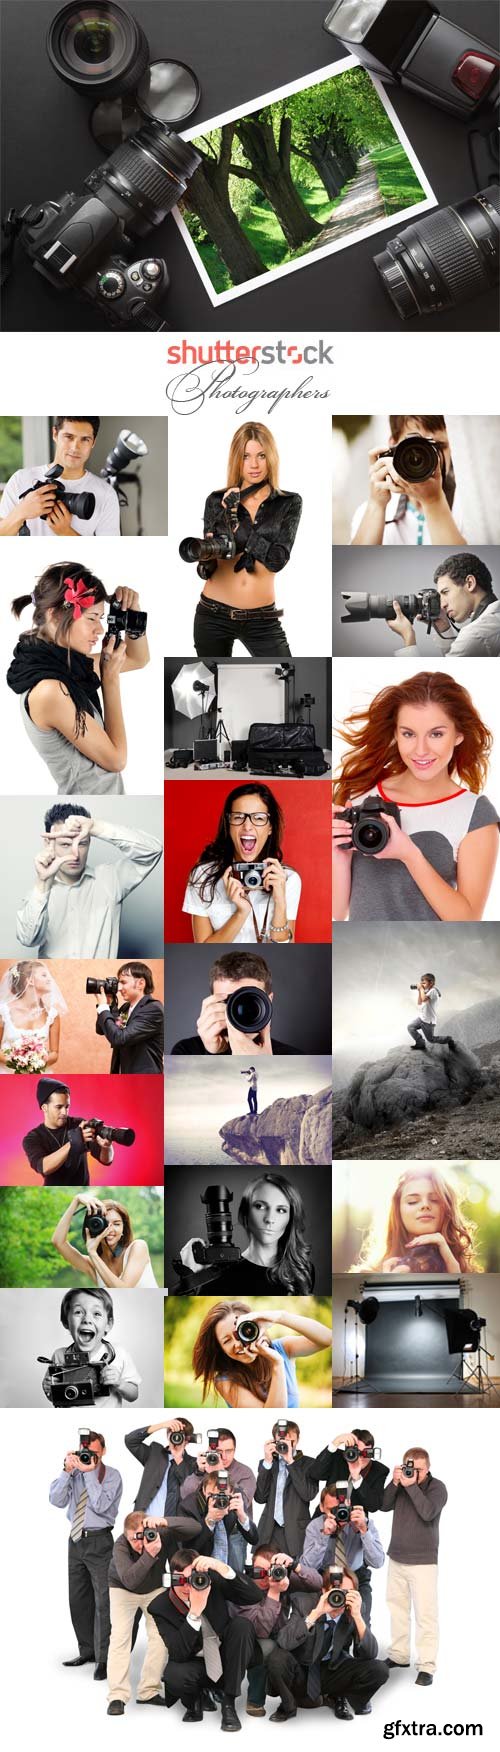 Stock photos photographers